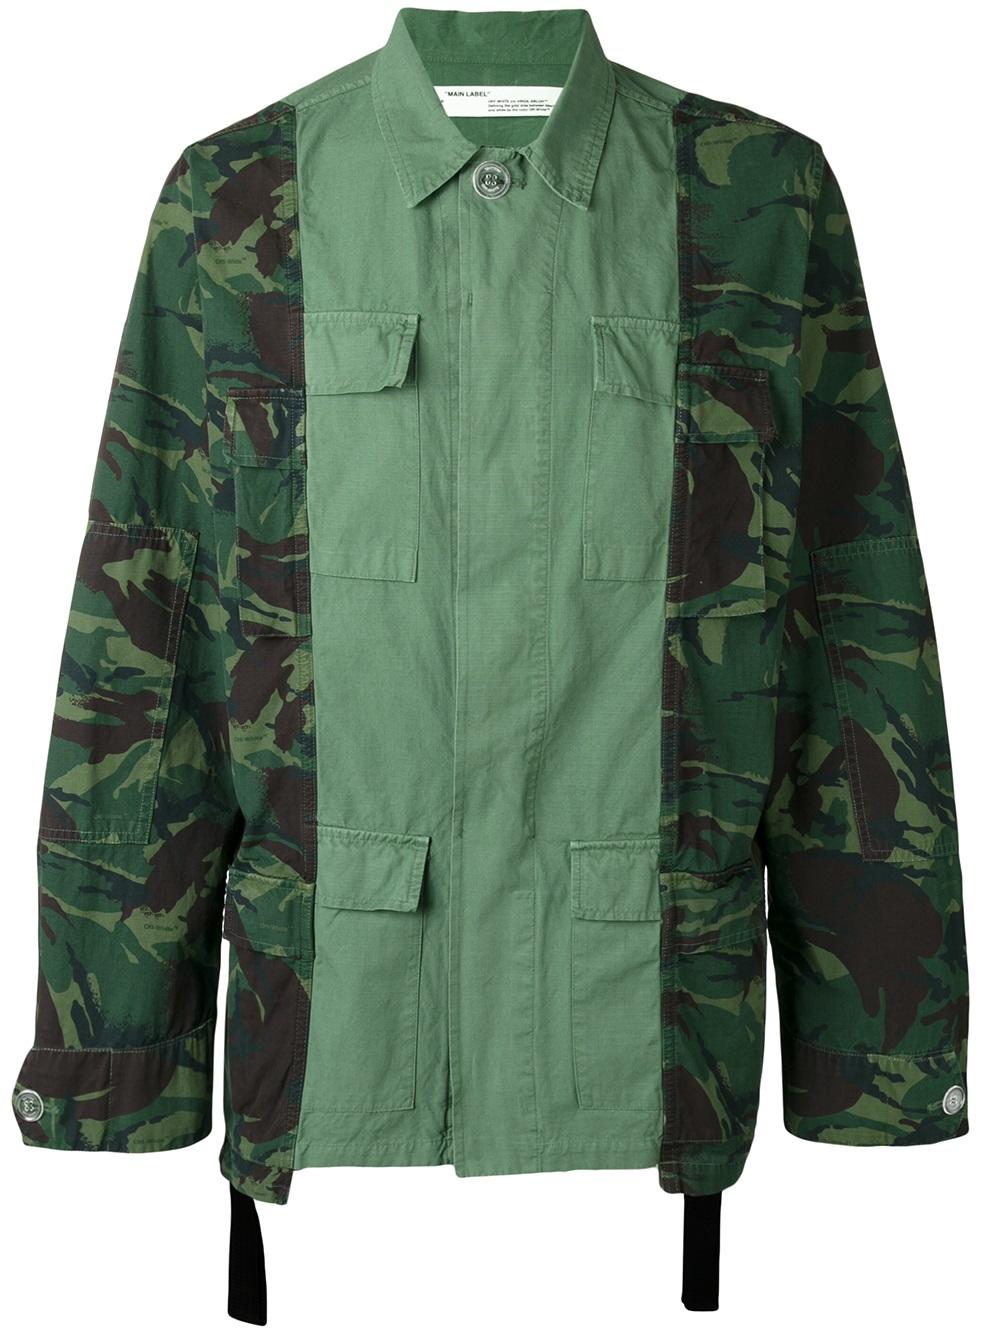 Off-White camouflage print cargo jacket 4001 GREEN Men Clothing Military Jackets